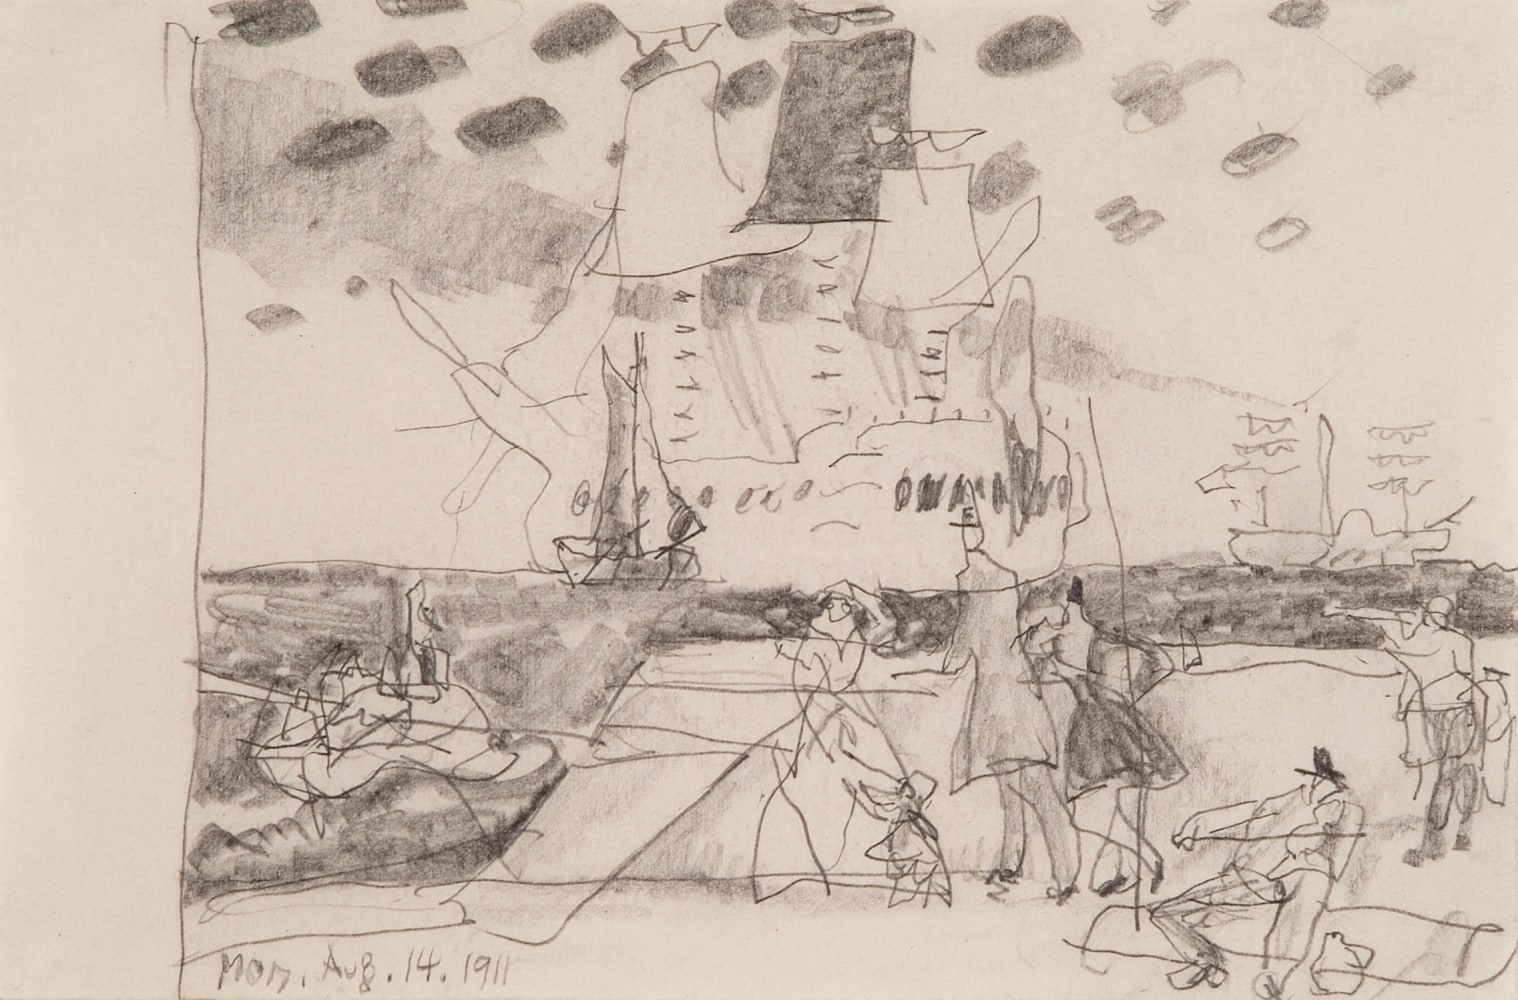 Lyonel&amp;nbsp;Feininger (1871&amp;ndash;1956)

(On the Quay, Baltic Sea), 1911

Pencil on paper
3 5/8 x 5 1/2 in. (9.2 x 14 cm)

Dated lower left:&amp;nbsp;Mon. Aug. 14. 1911